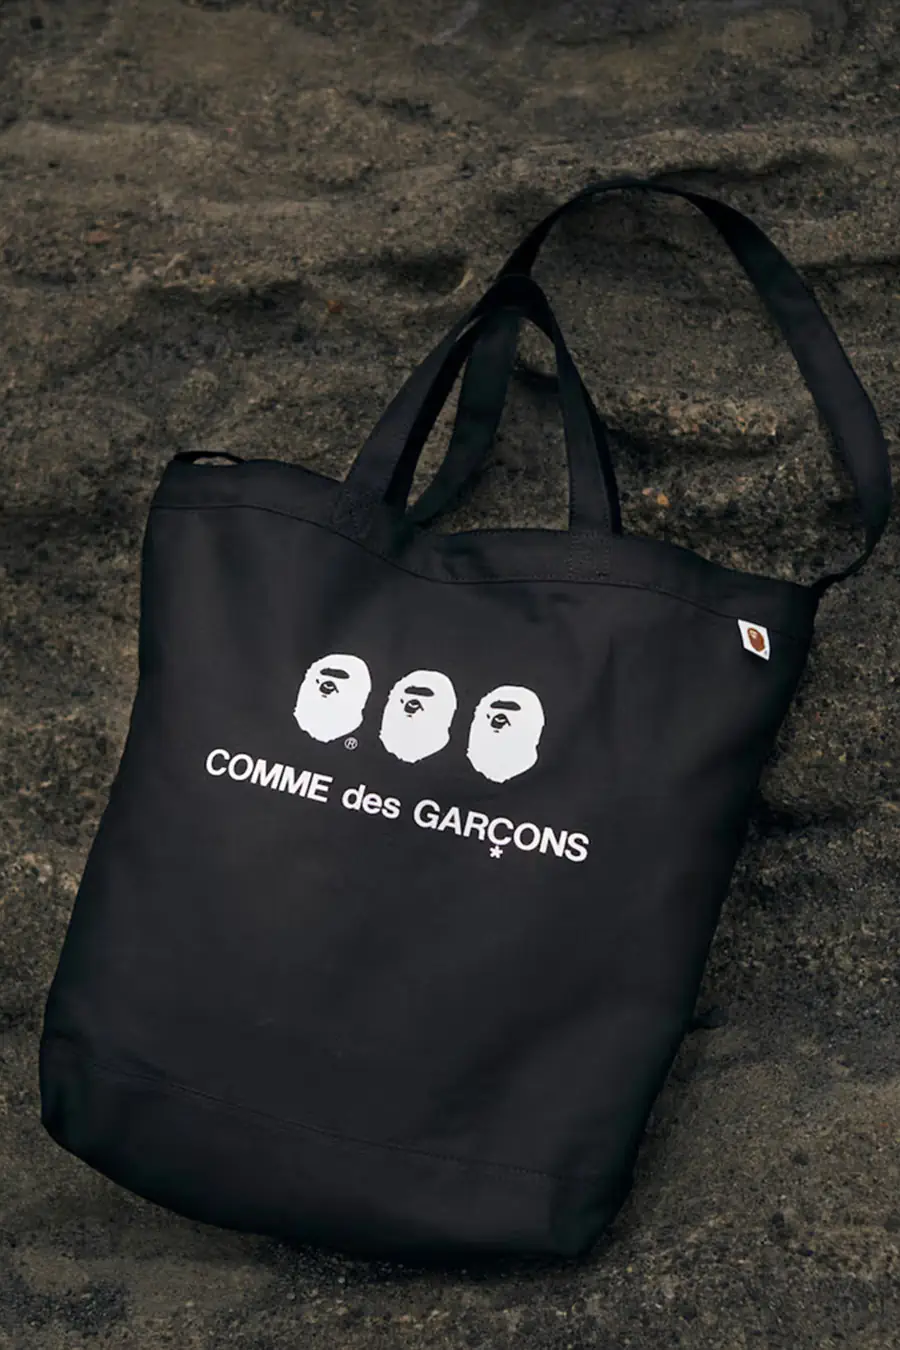 Comme des Garçons x BAPE launch dynamic collaboration for Spring/Summer 2023